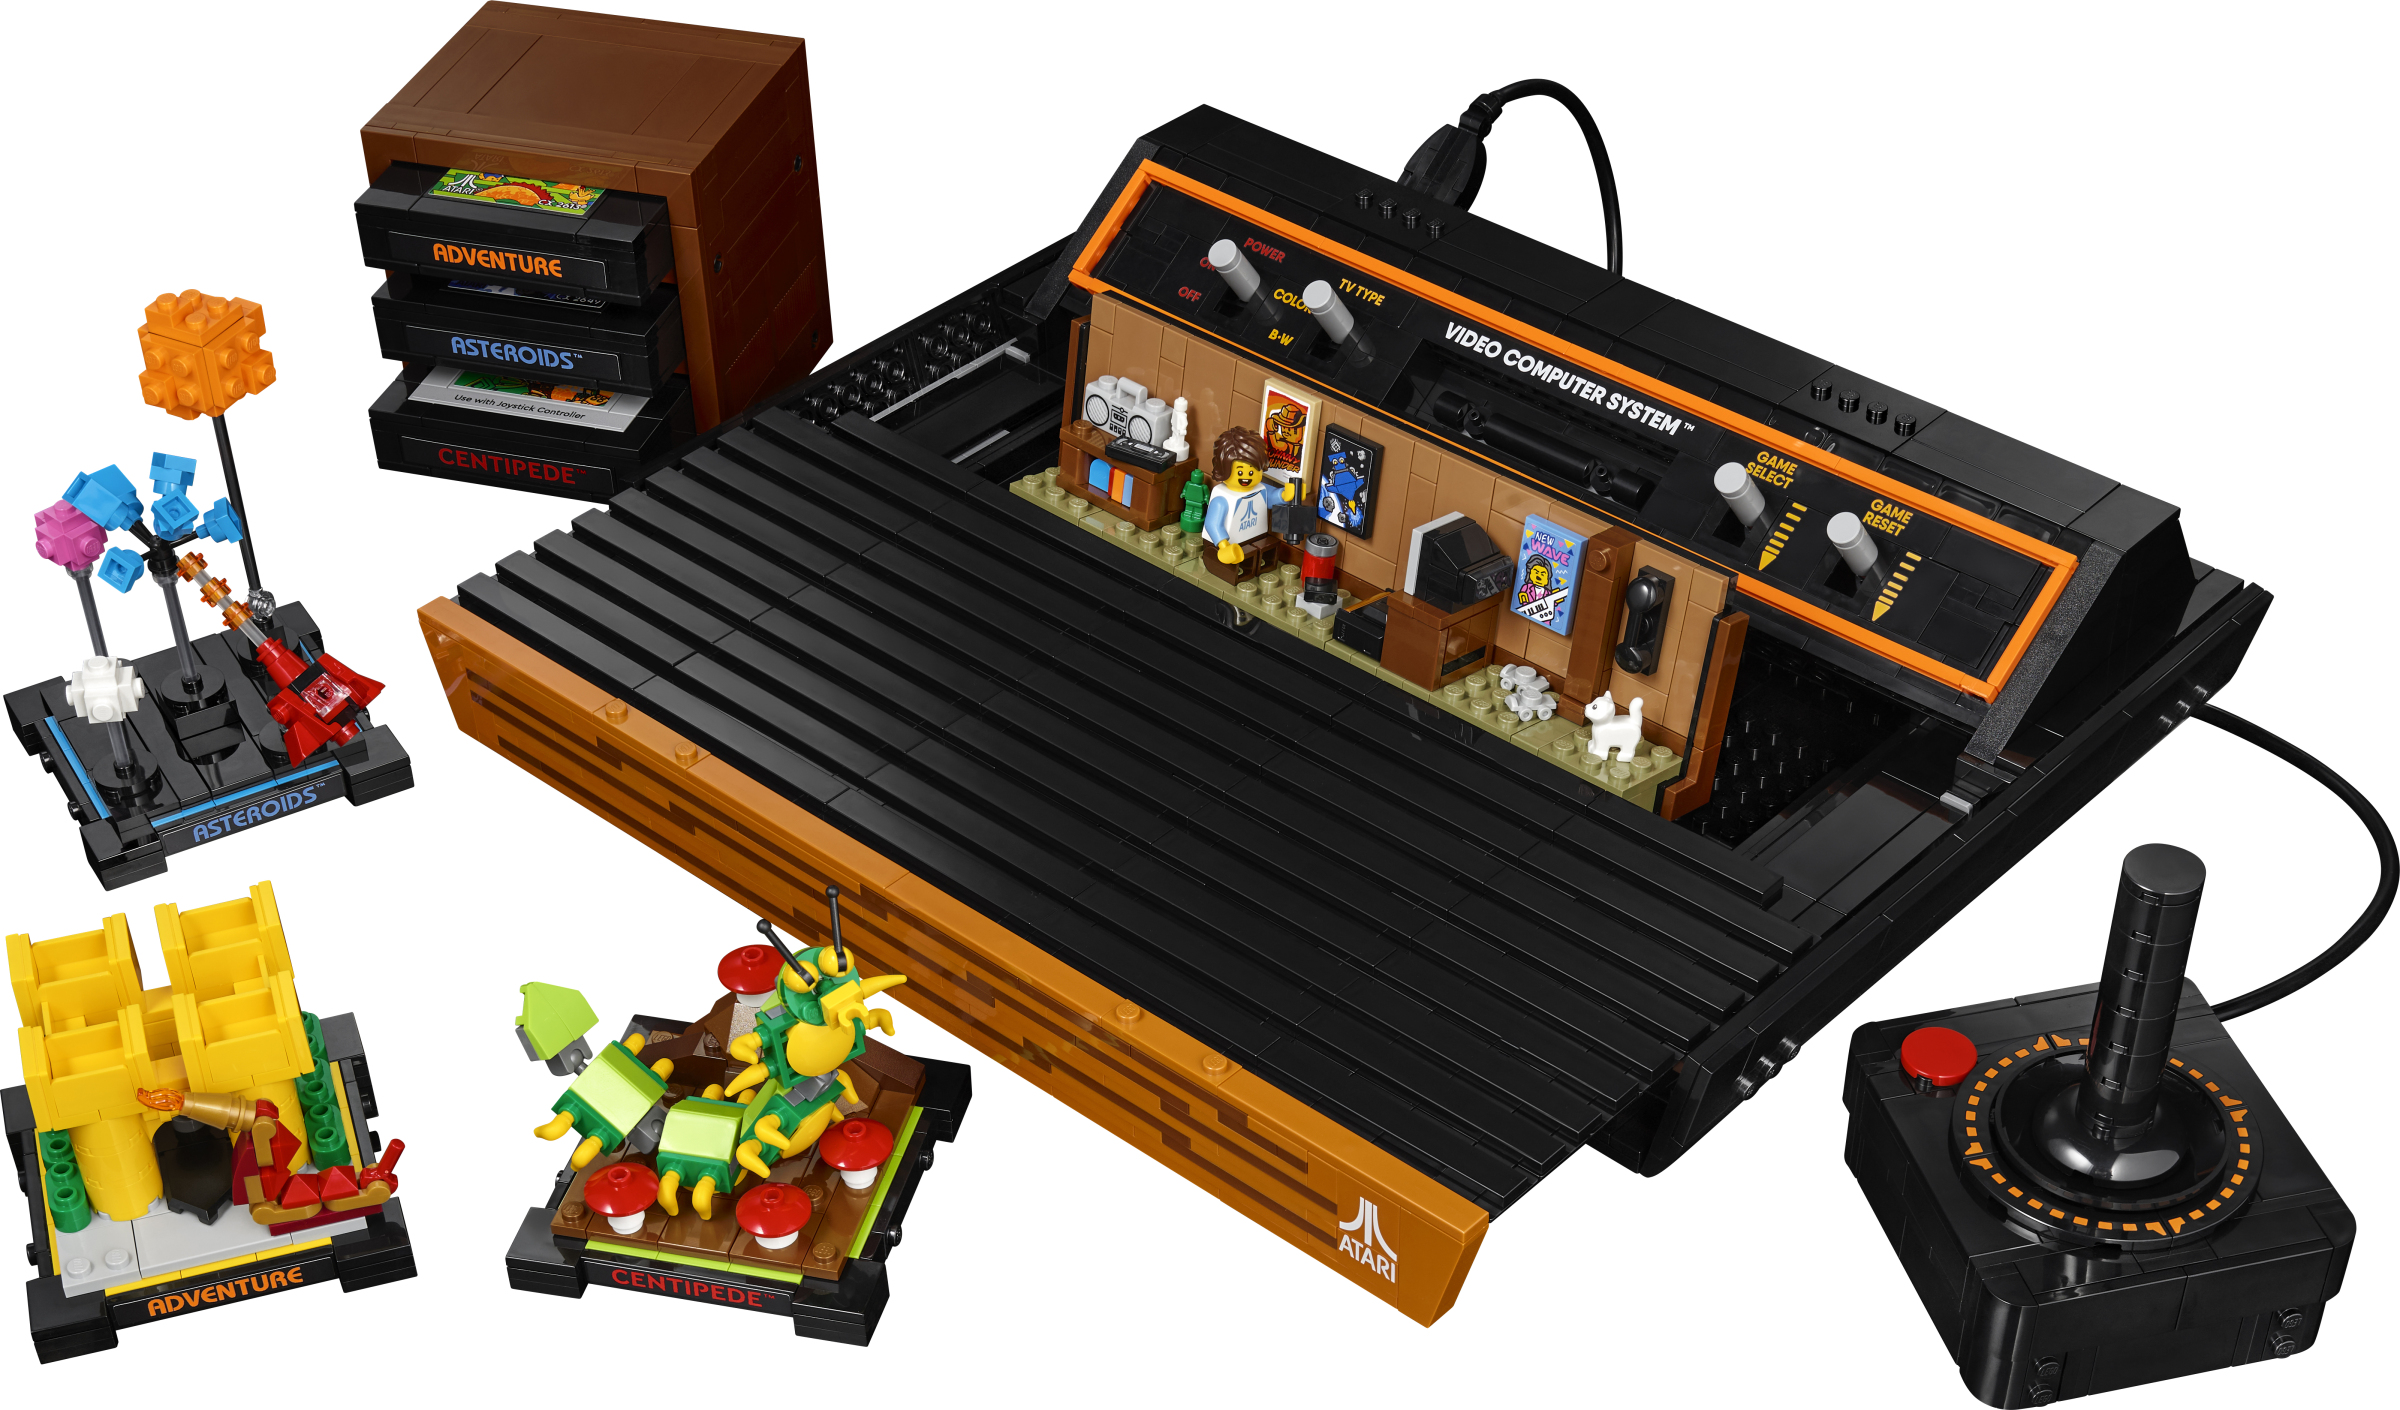 Lego's Atari 2600 is a brilliant bit of weaponized nostalgia – and